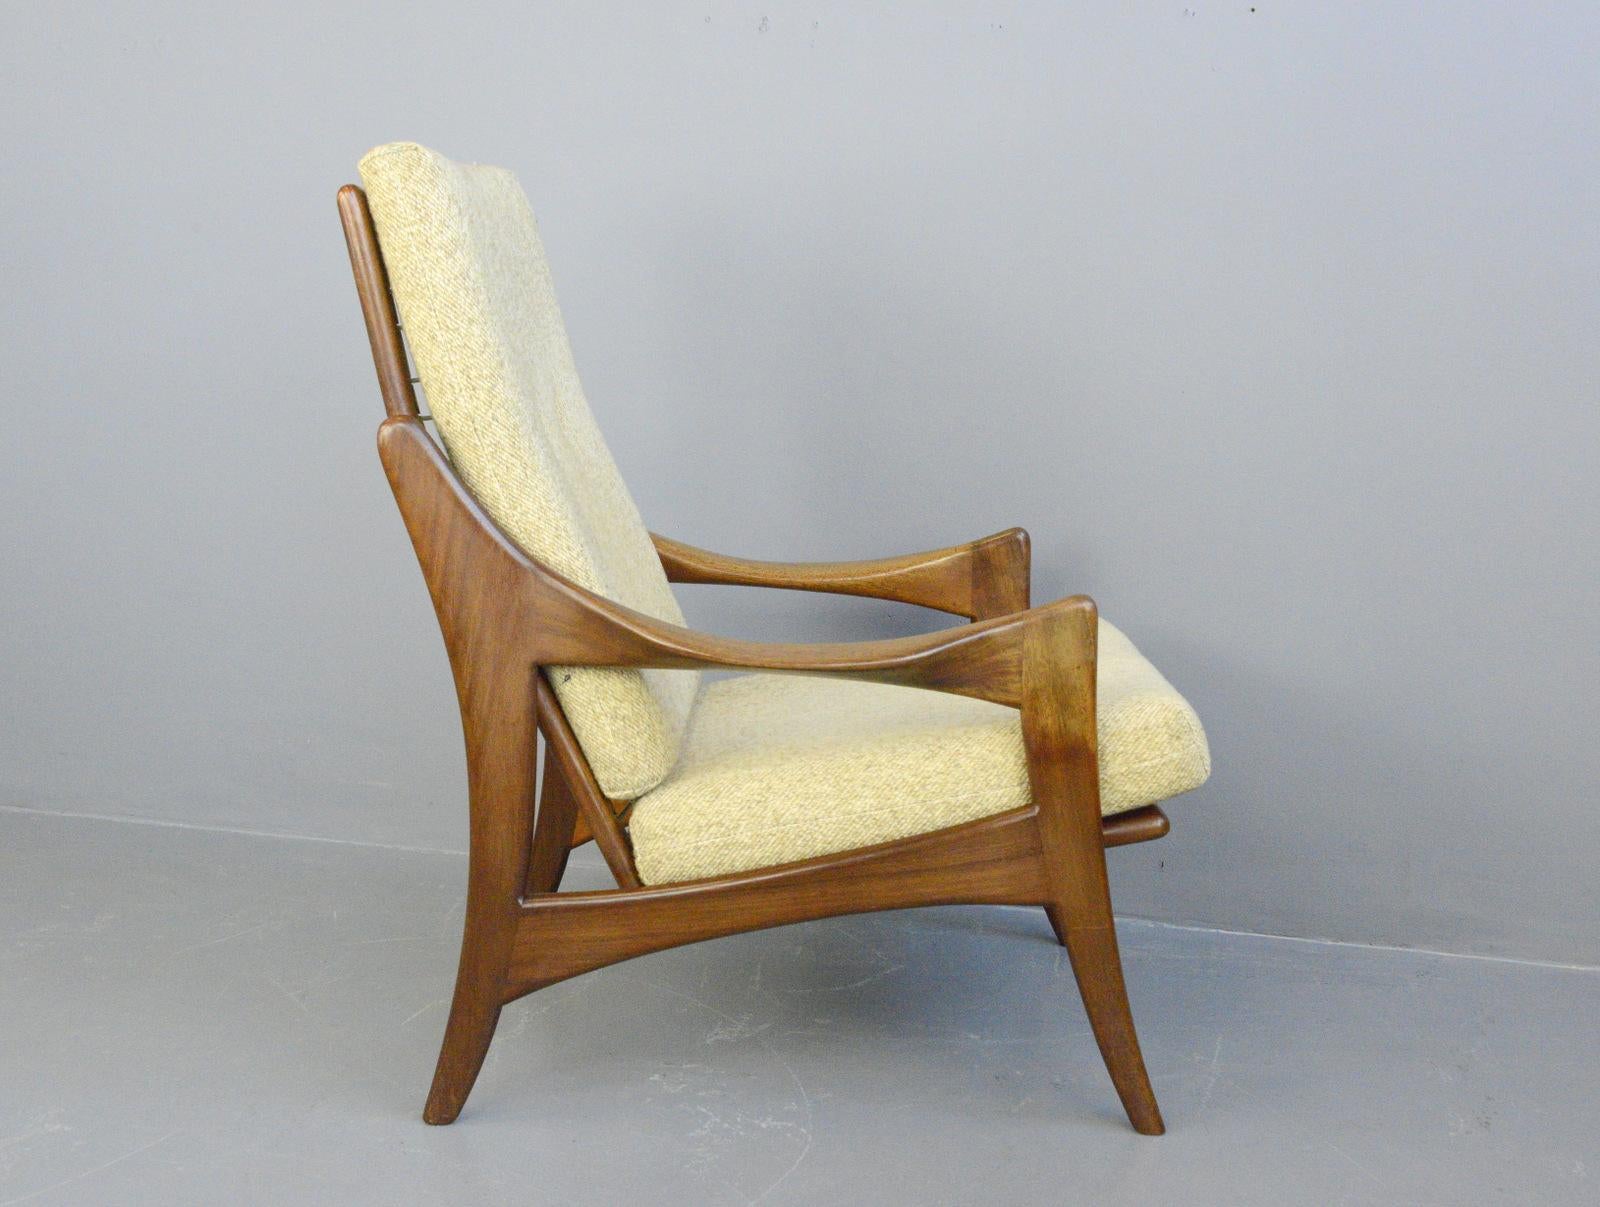 High back midcentury lounge chair by Gelderland, circa 1950s

- Sculptural teak frame
- Sprung seat and backrest
- Original upholstery
- Produced by Gelderland
- Dutch, 1950s
- Measures: 72cm wide x 80cm deep x 98cm tall
- 44cm seat